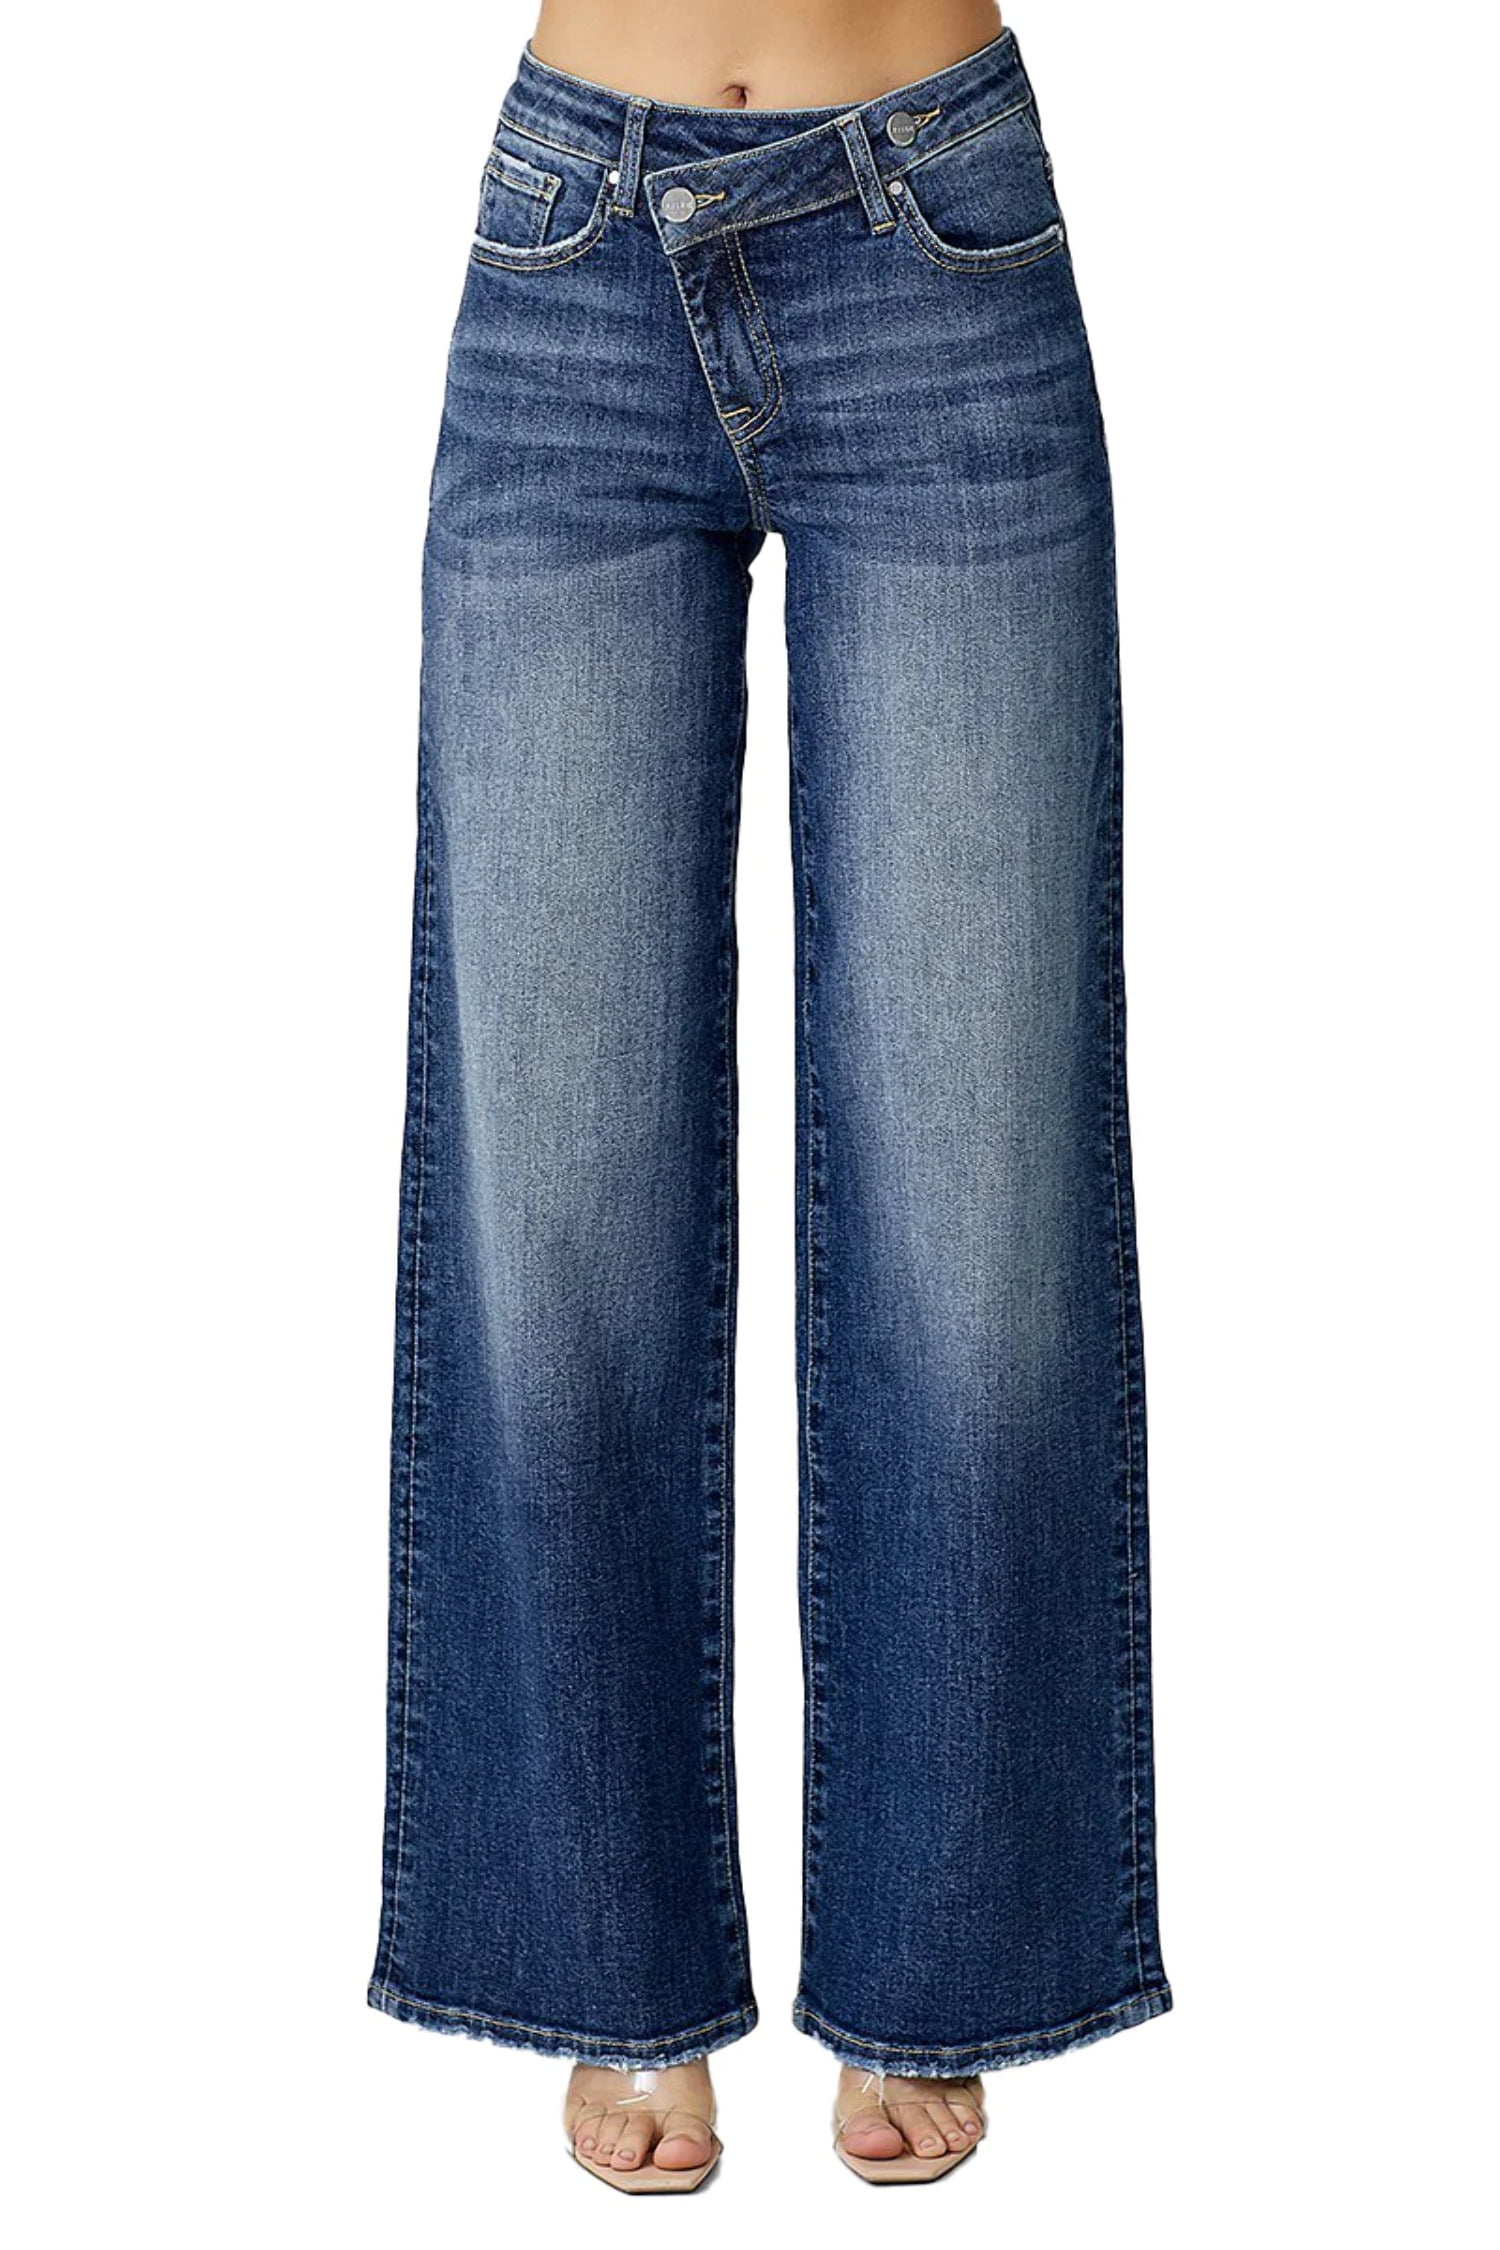 Risen Jeans - Mid Rise Crossover Wide Leg Jeans - RDP5281 - Walmart.com